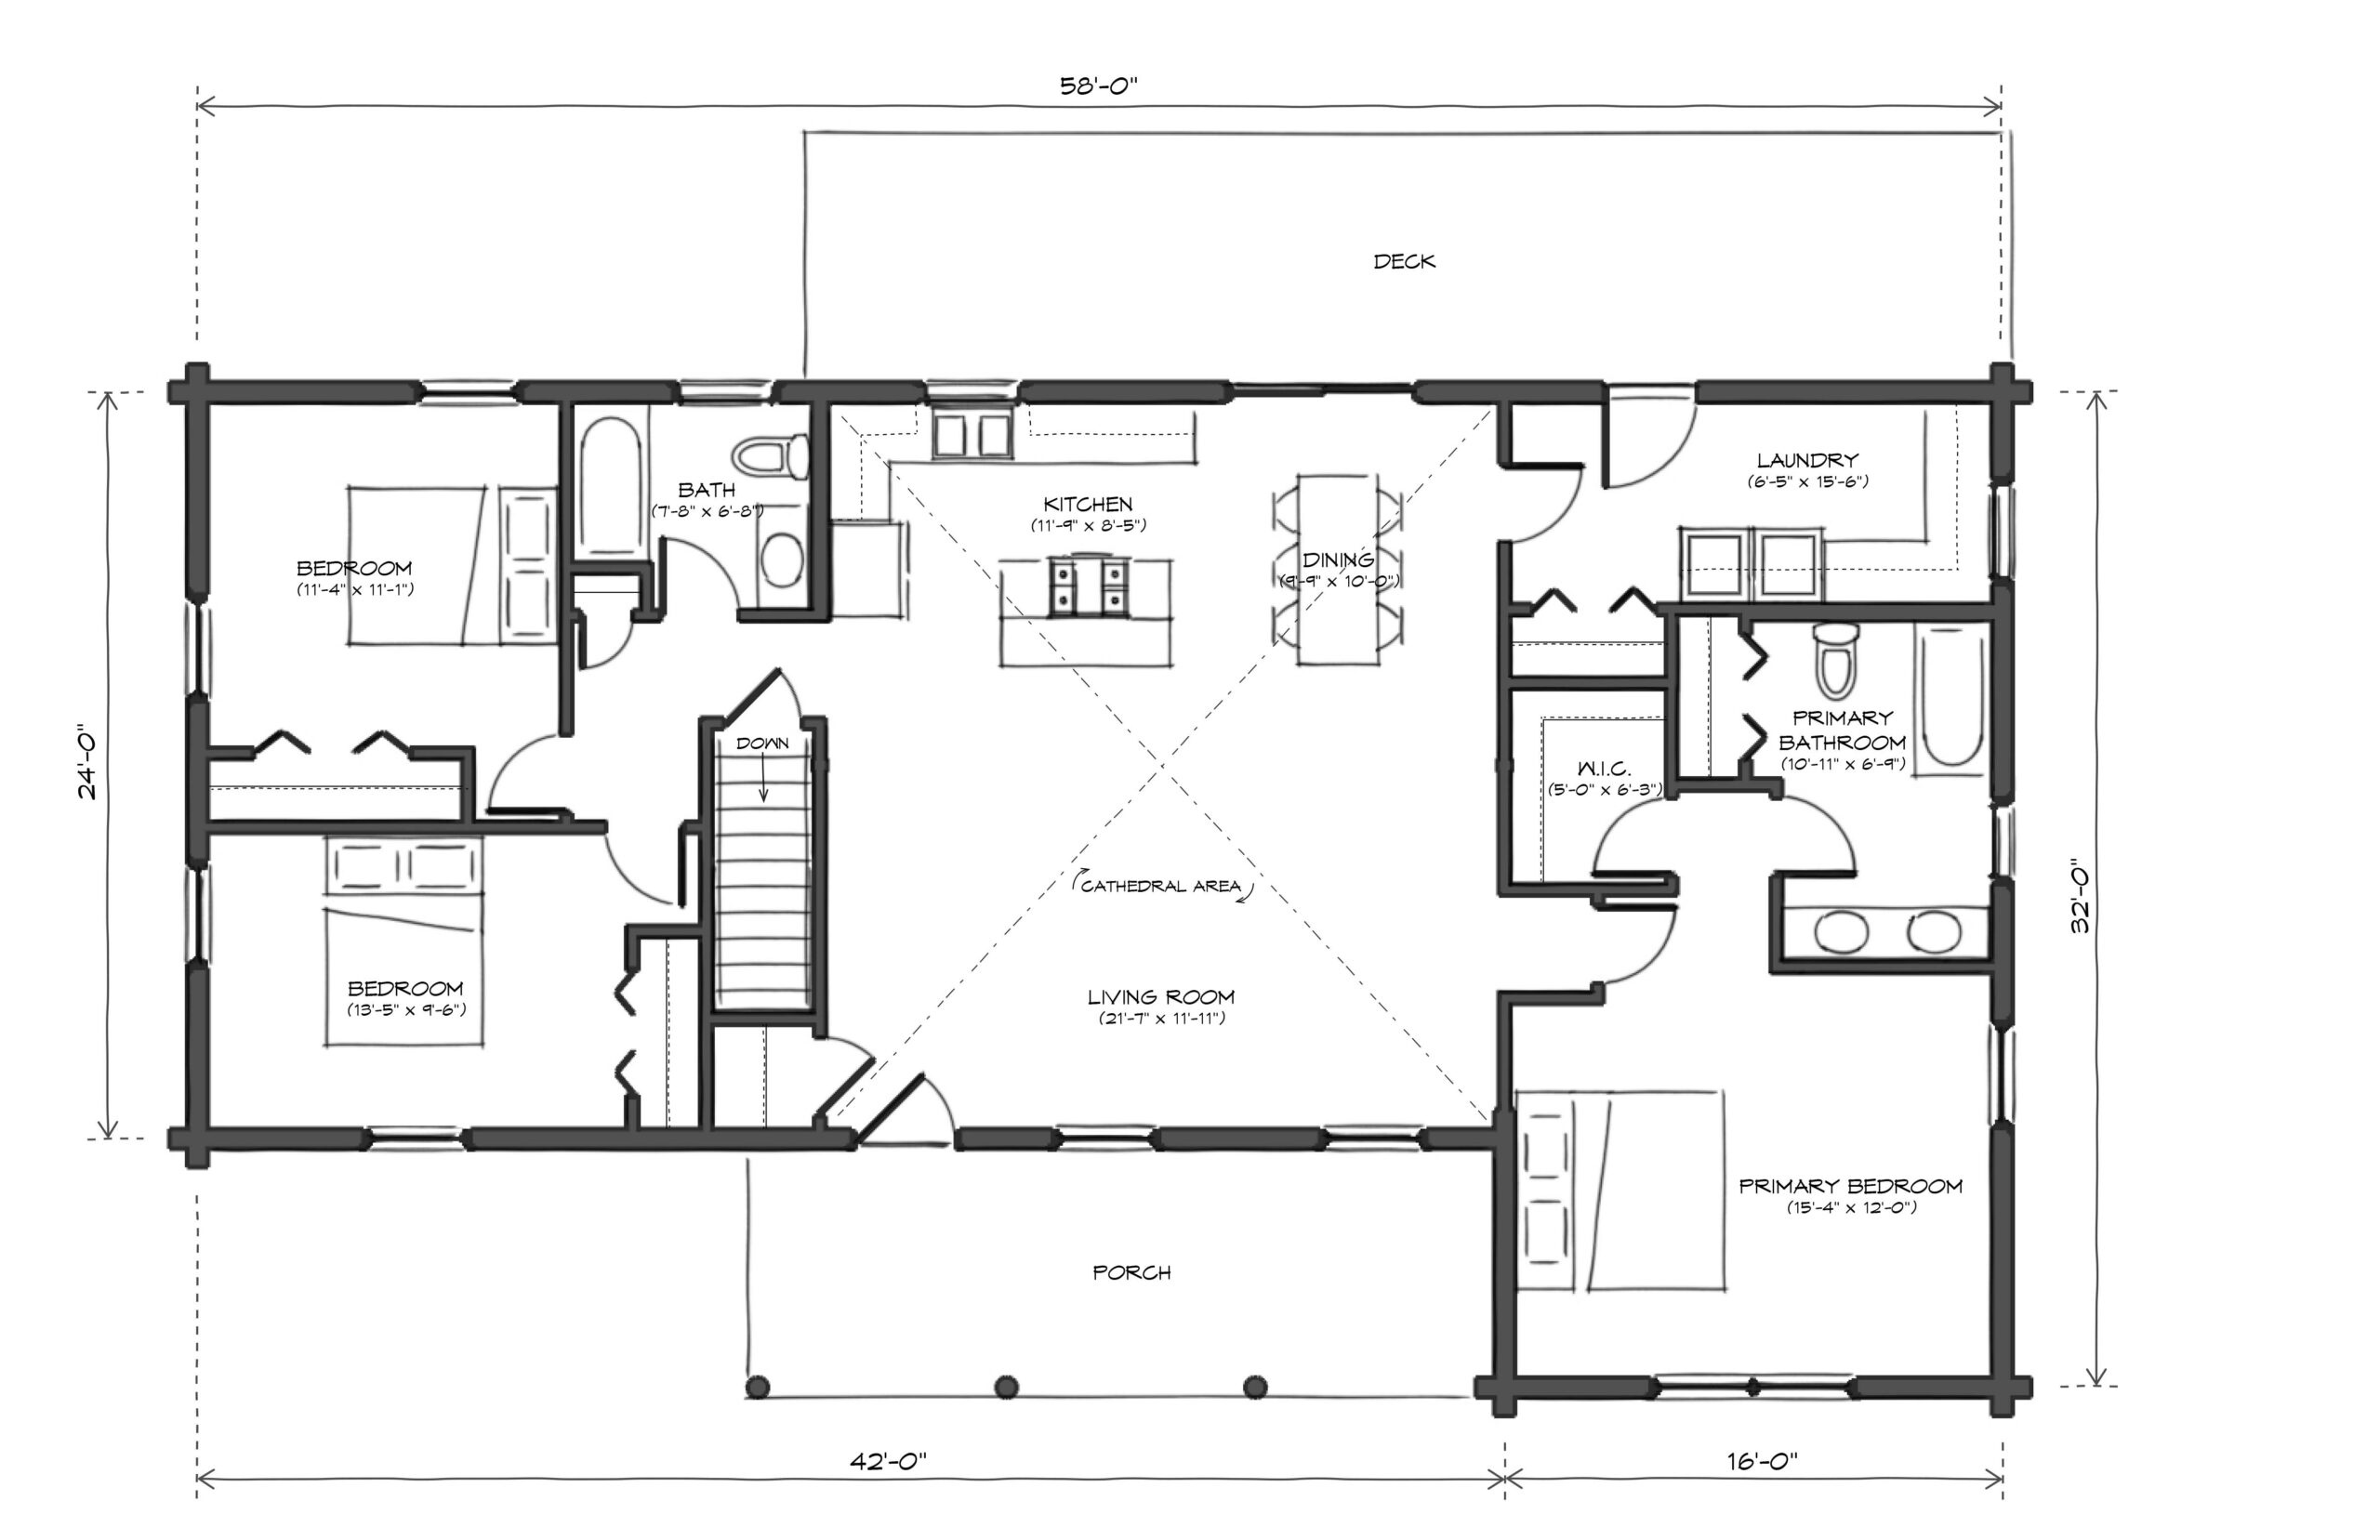 The Townsend first floor plan